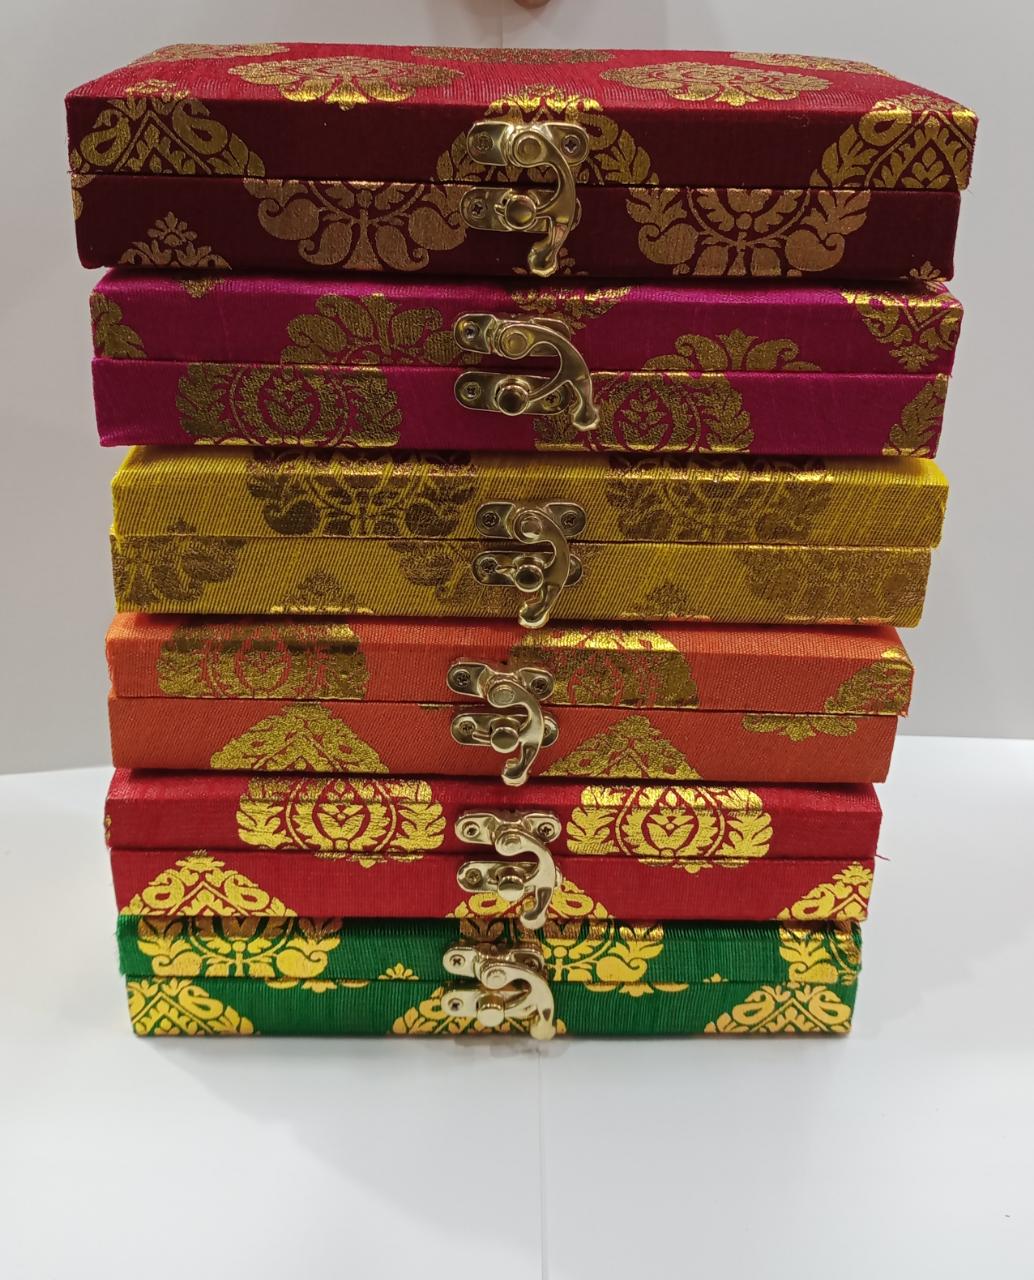 LAMANSH Cash box Assorted colors / Fabric & Wood / 5 LAMANSH® Pack of 5 (4*8 inch) Printed Jaipuri Cash Box, Shagun Box, Gift Box, Gaddi Box, Jewellery Box for Wedding Gift / Low cost Return Gifts 🎁 for Guests